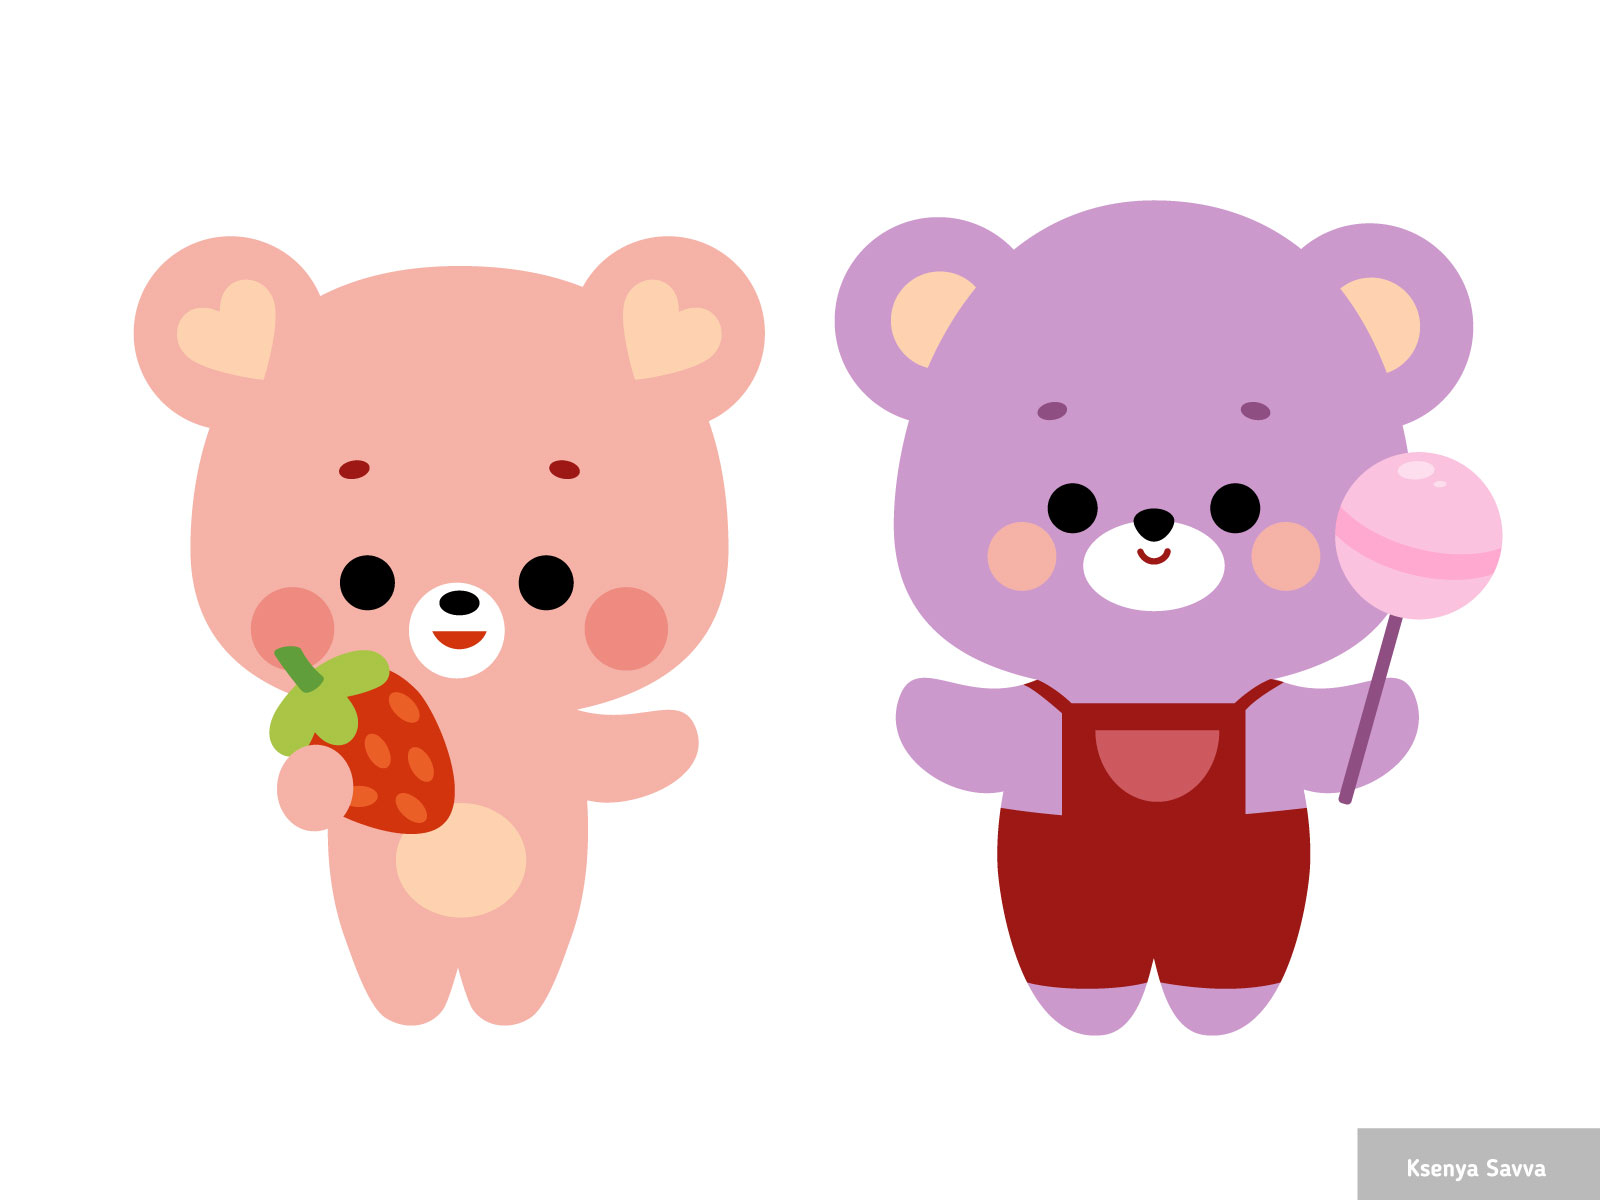 Cute cartoon characters kawaii bears by Ksenya Savva on Dribbble